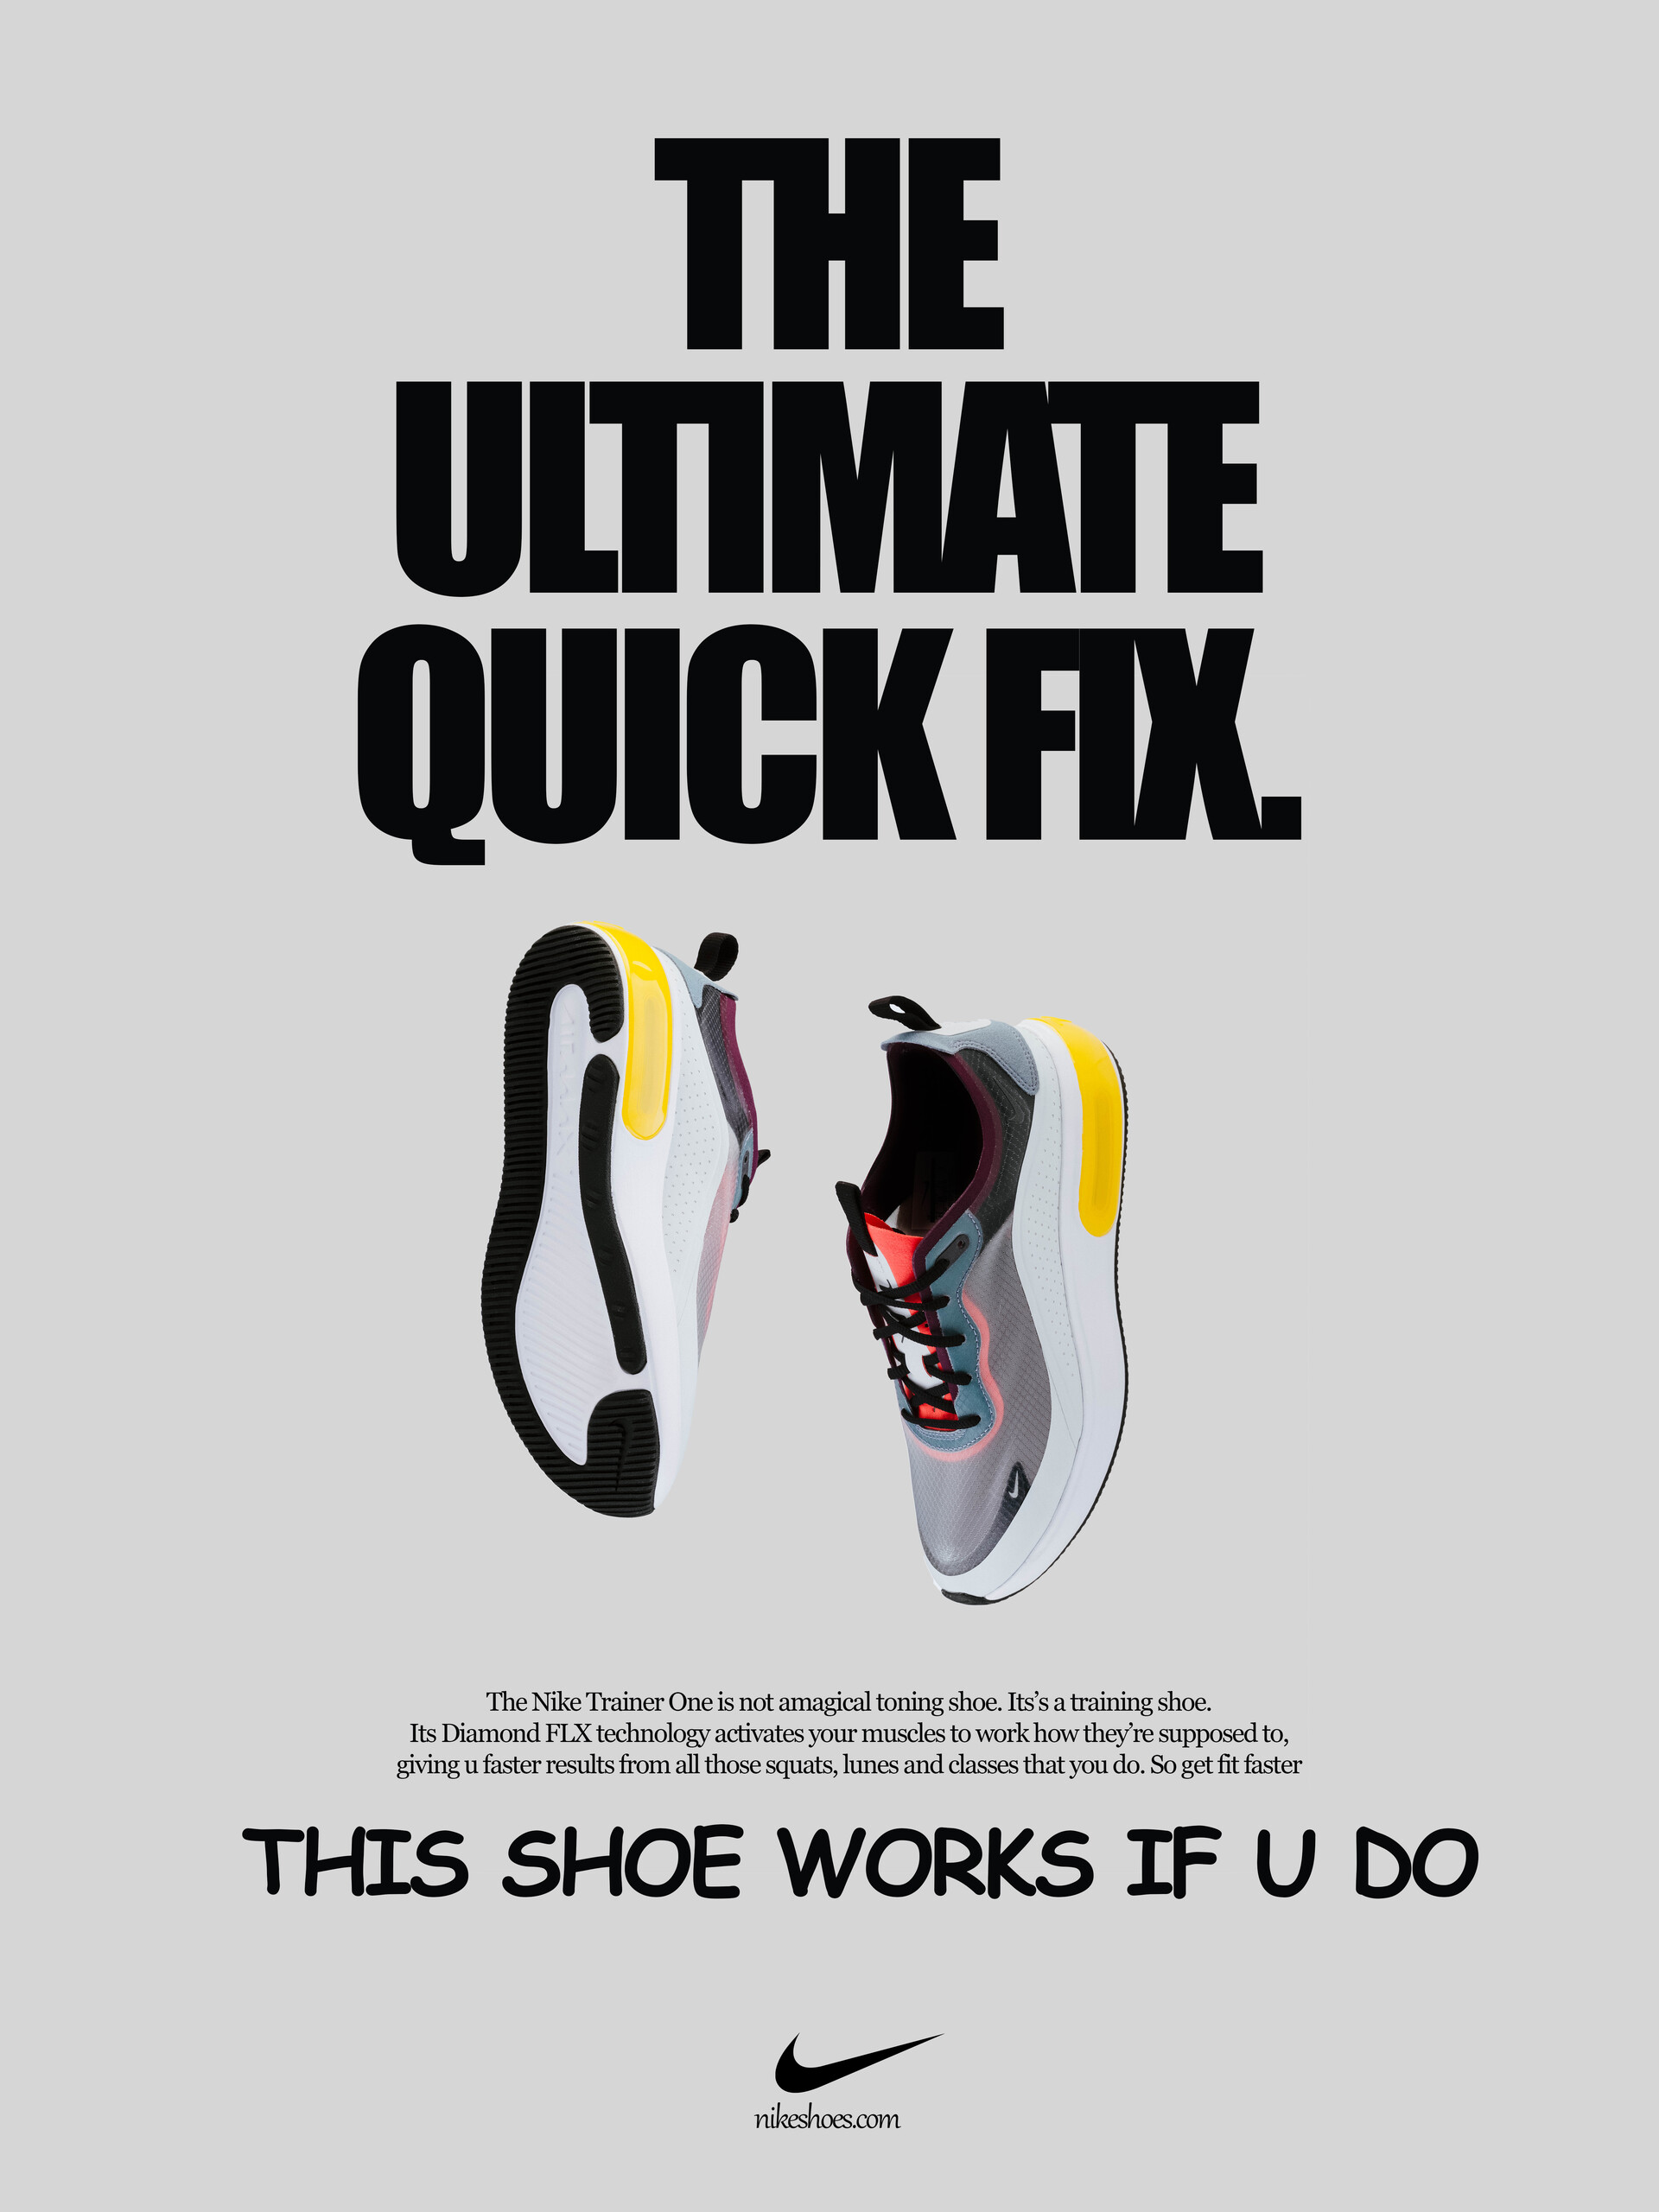 ArtStation - Nike shoe poster design.